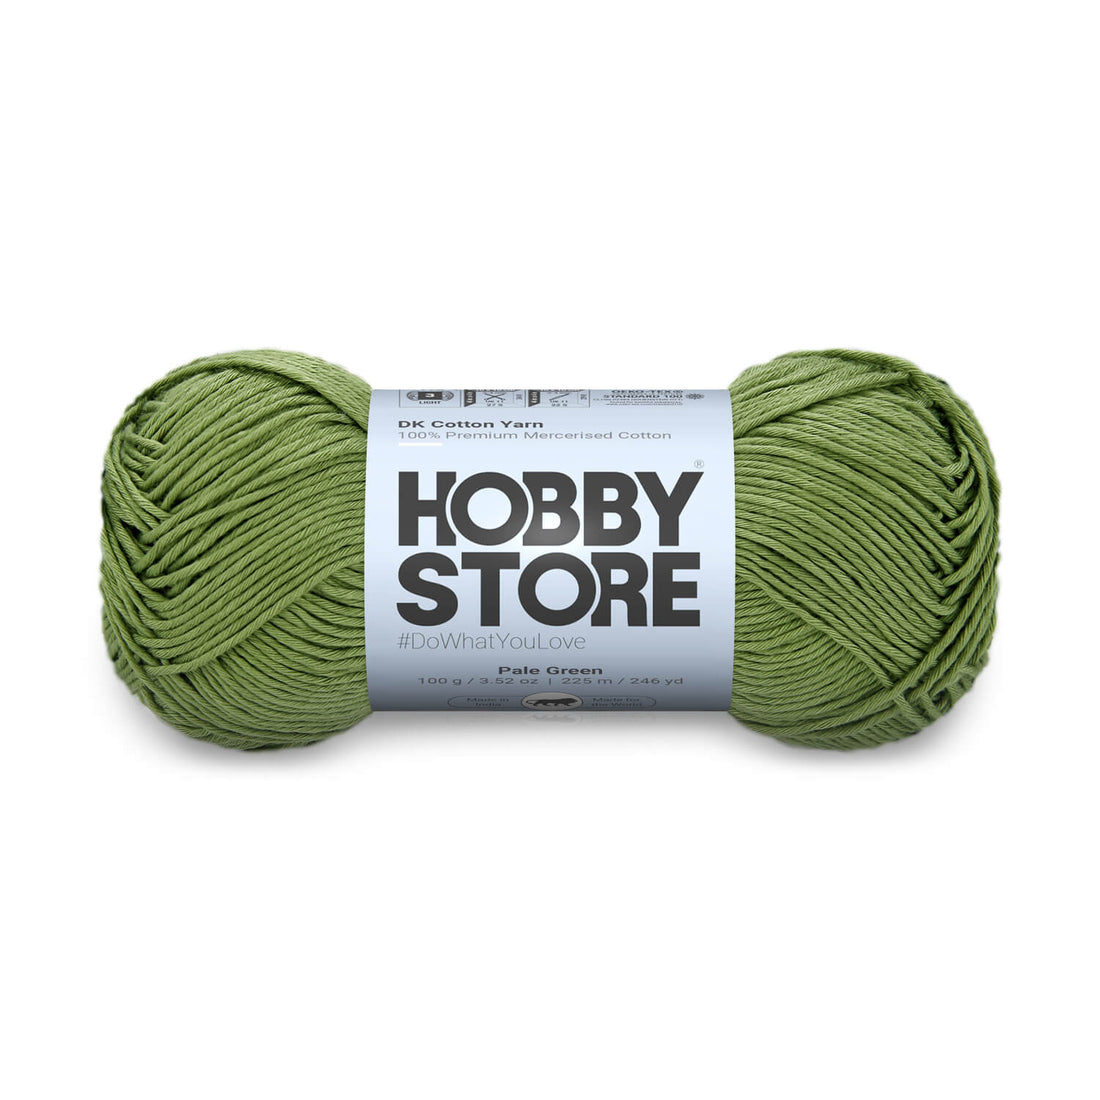 DK Mercerised Cotton Yarn by Hobby Store - Pale Green - 335